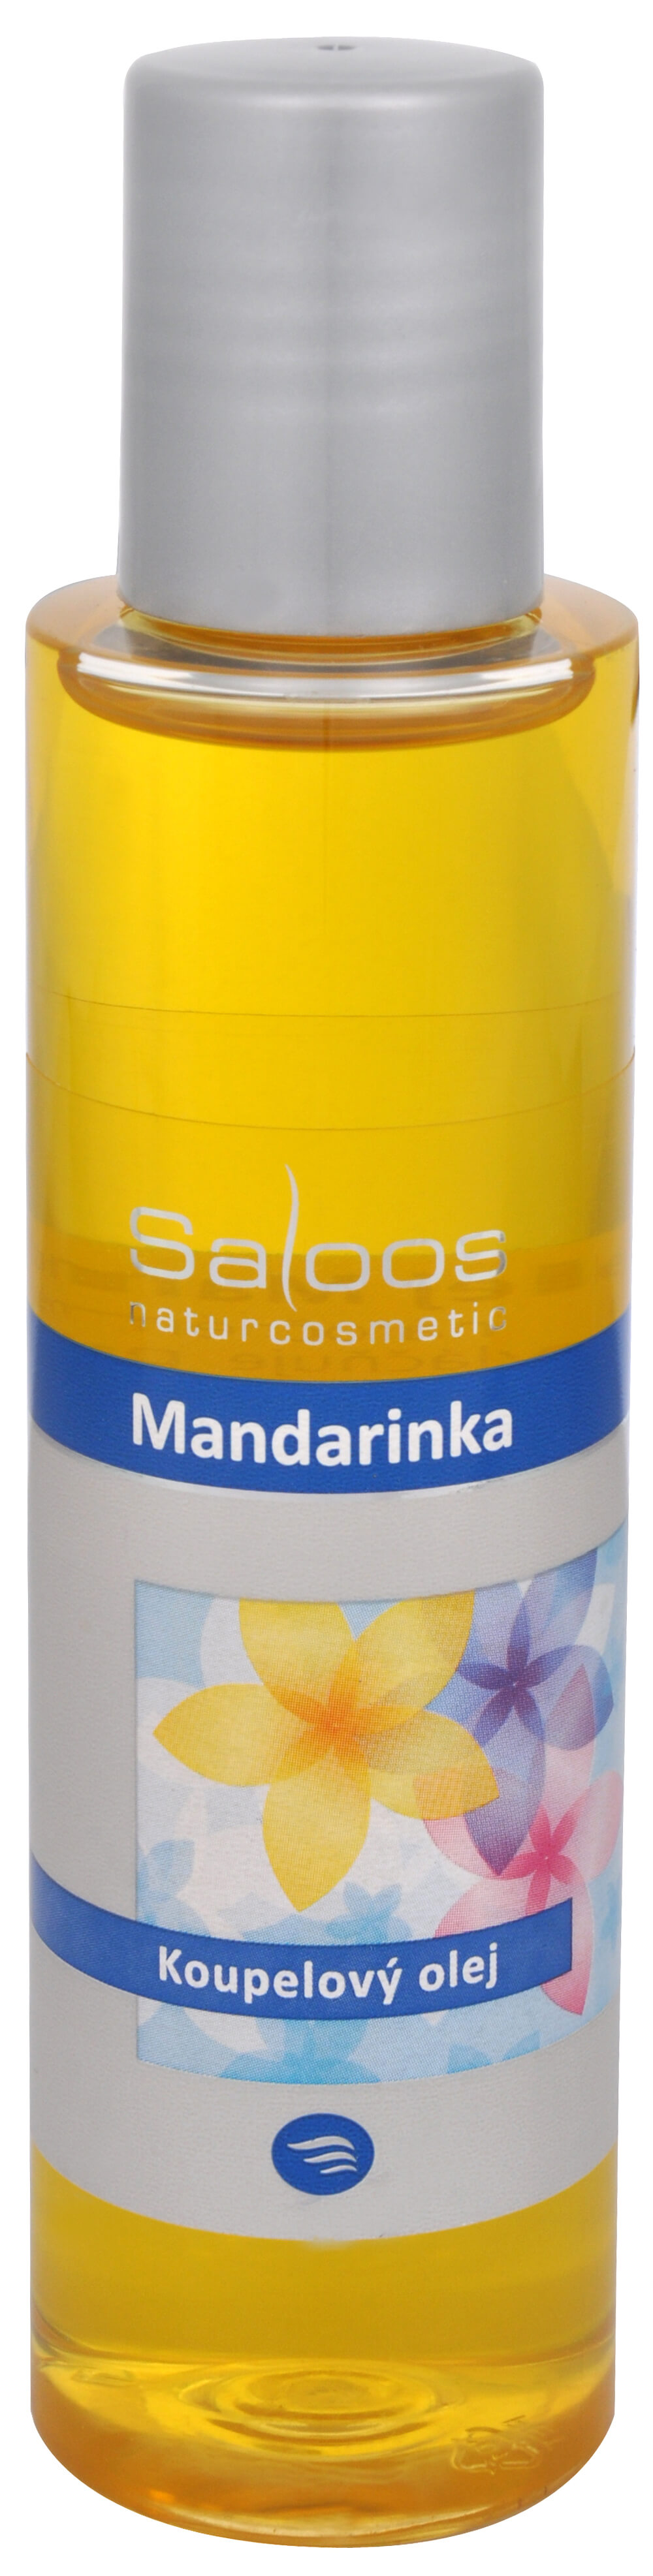 Zobrazit detail výrobku Saloos Koupelový olej - Mandarinka 125 ml